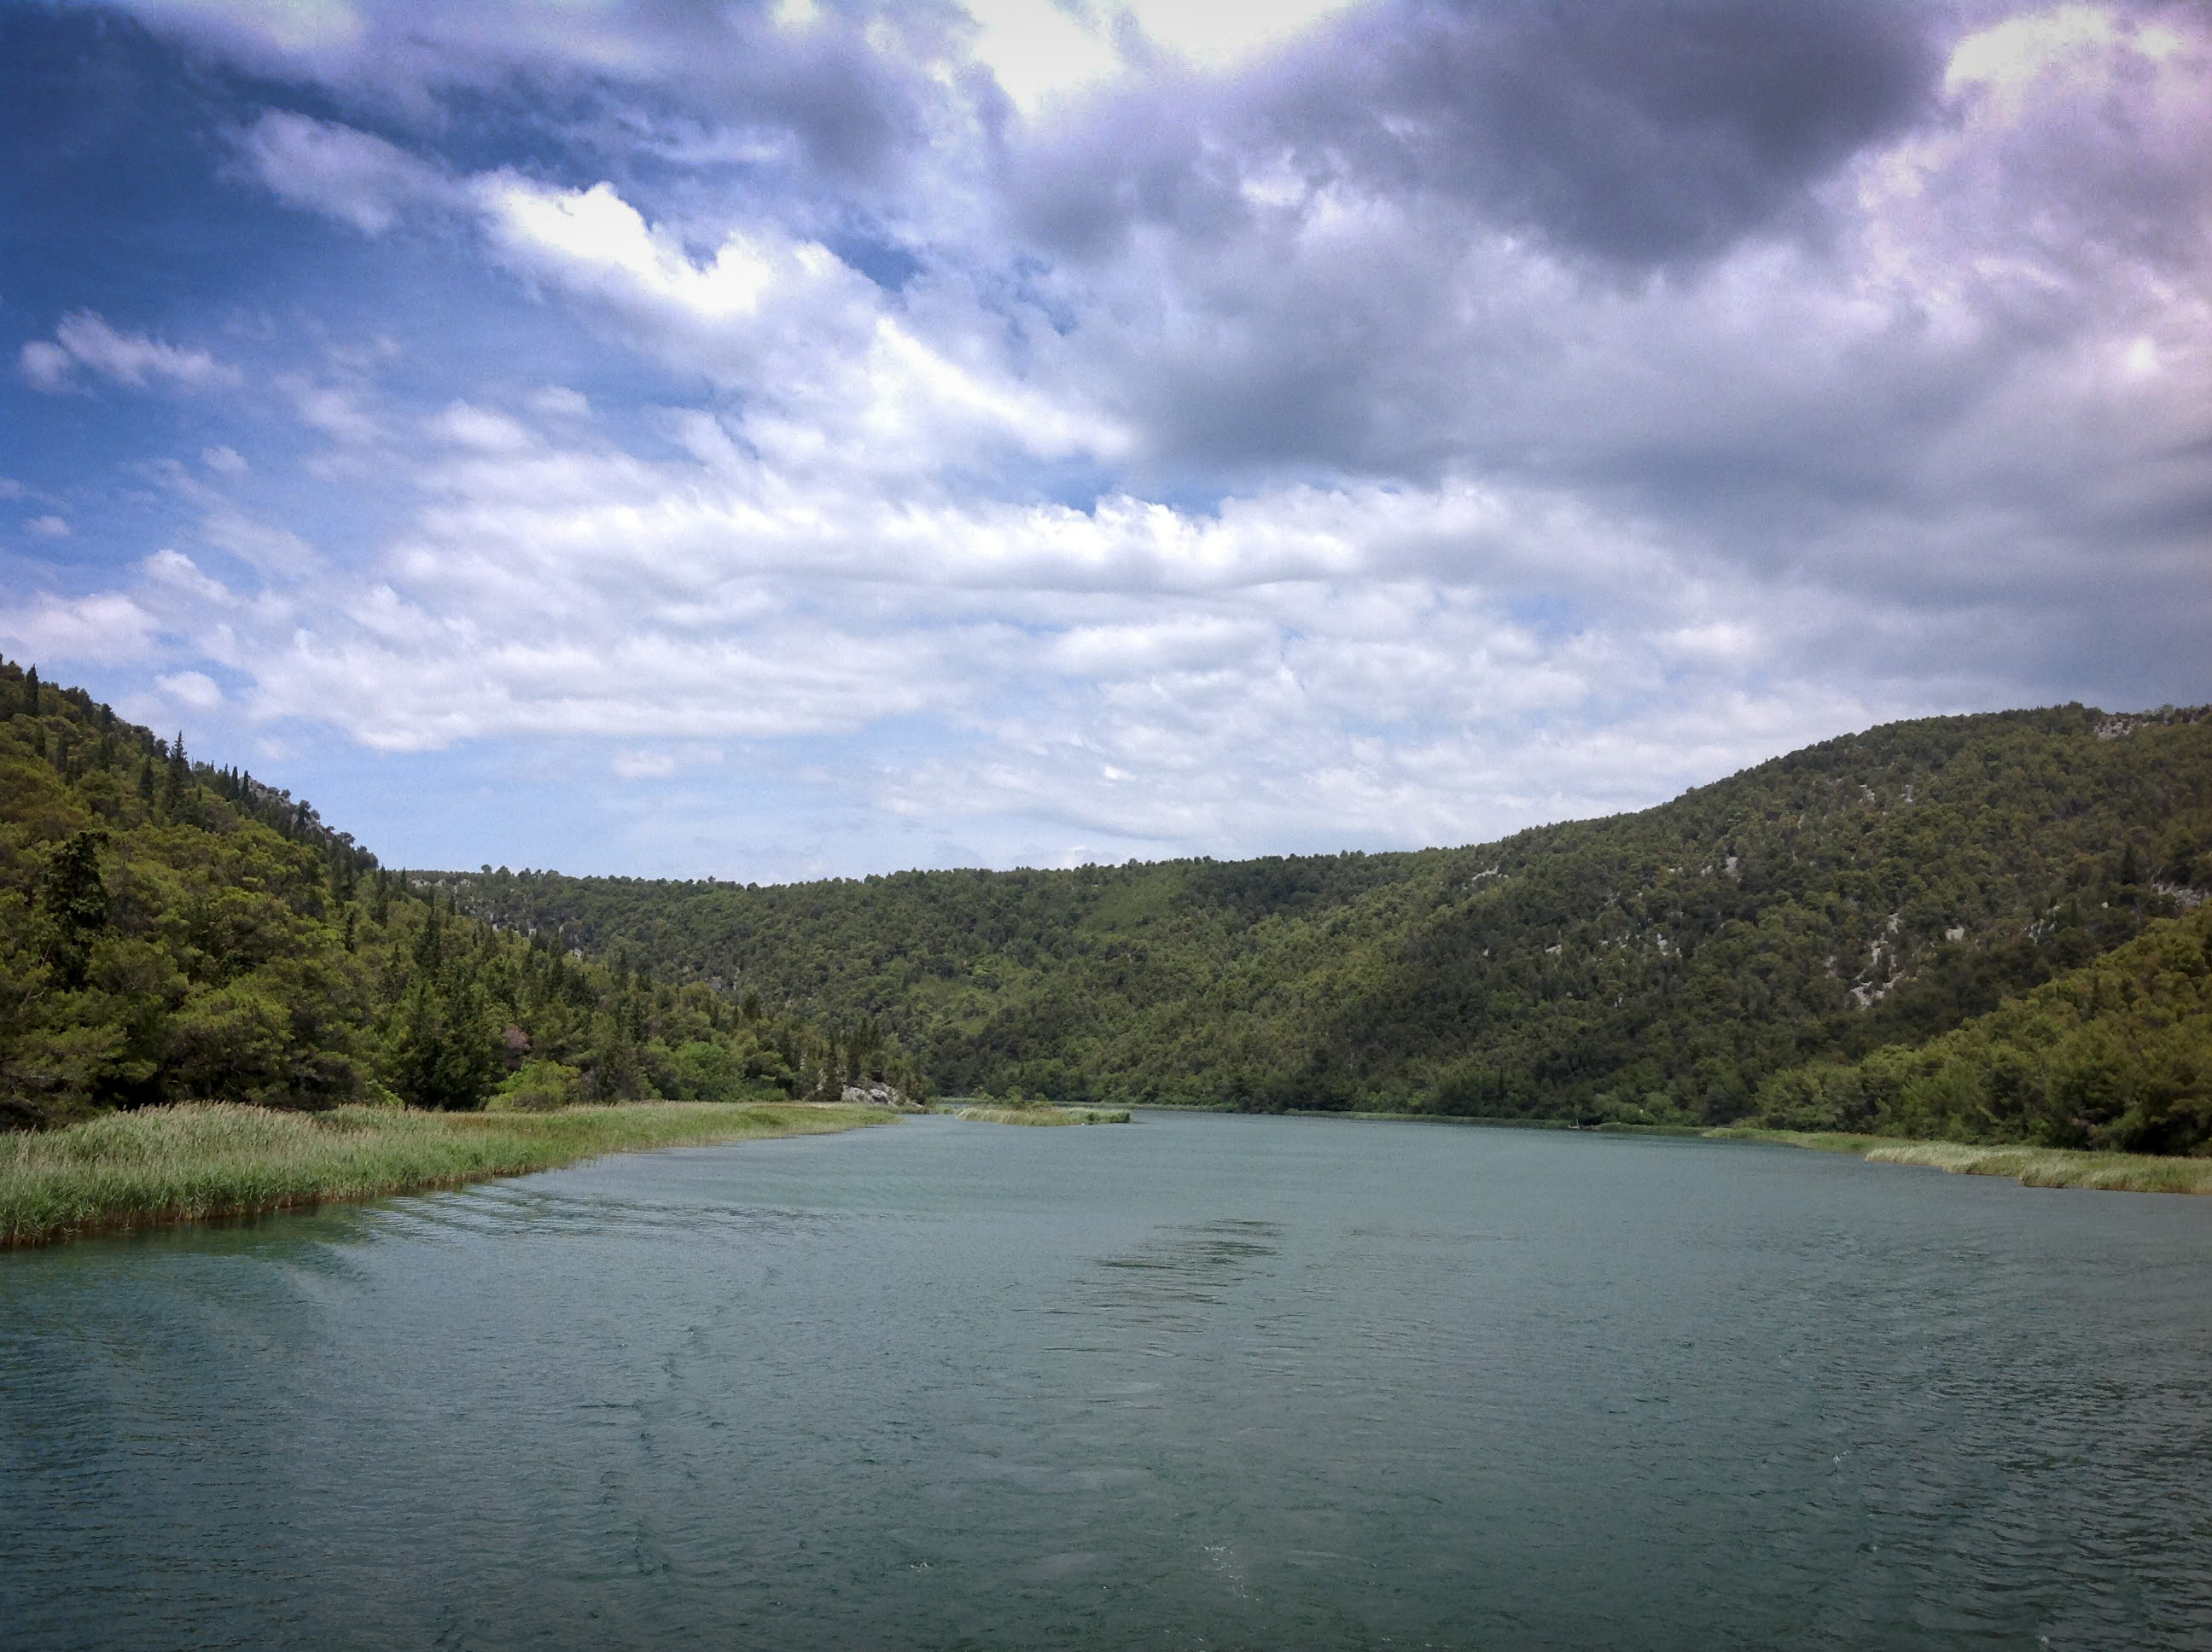 Sky and Lake Landscape in Croatia image - Free stock photo - Public ...